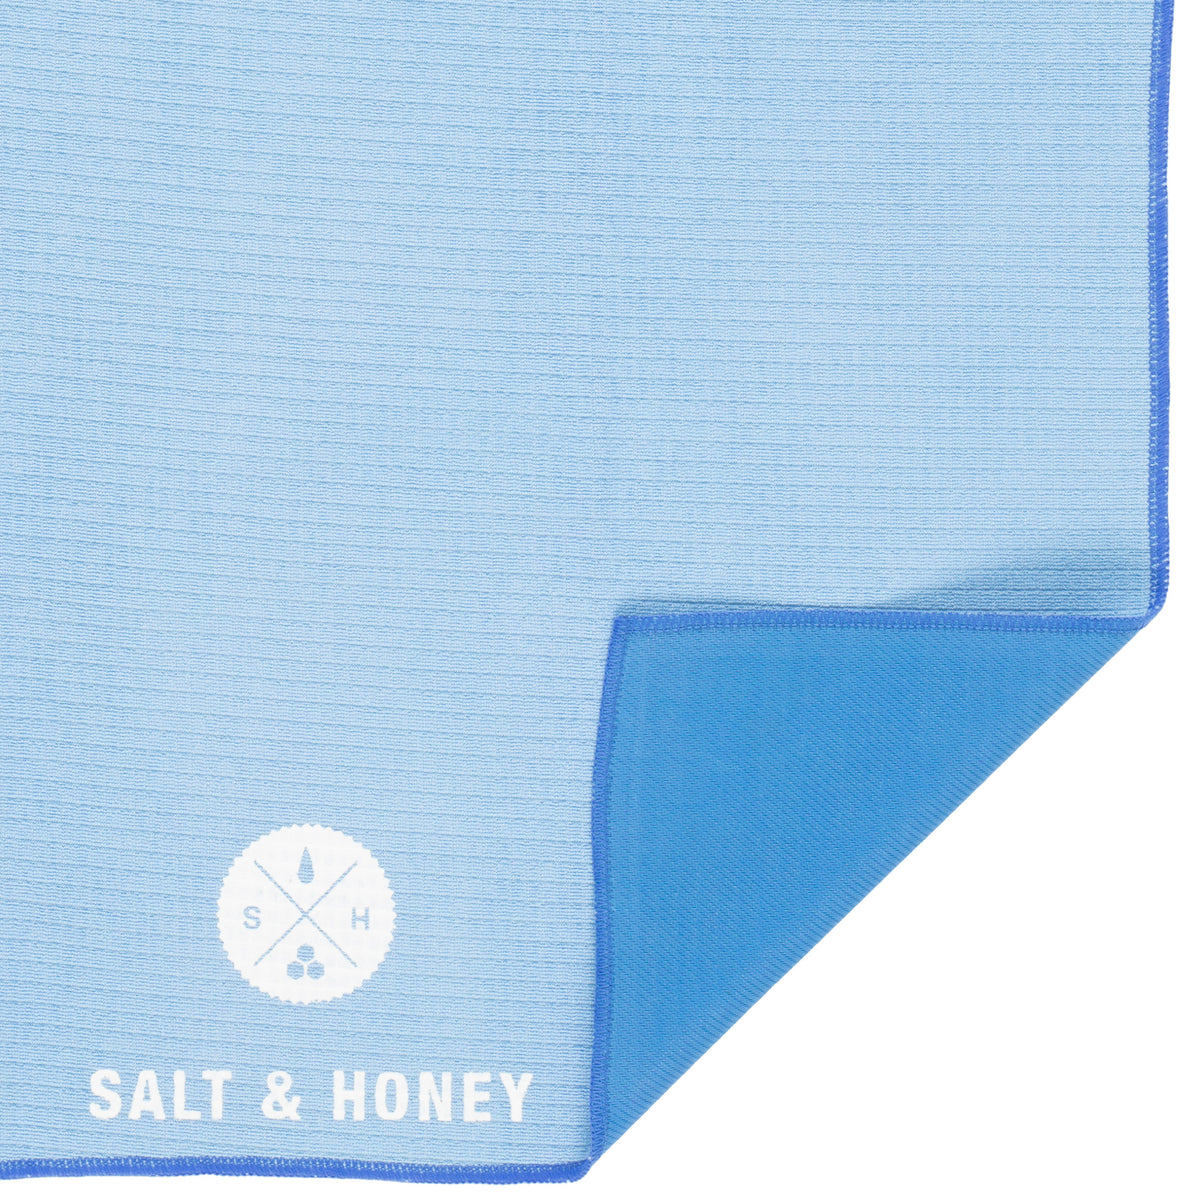 Salt & Honey Pilates Reformer Towel for Sale in Seattle, WA - OfferUp